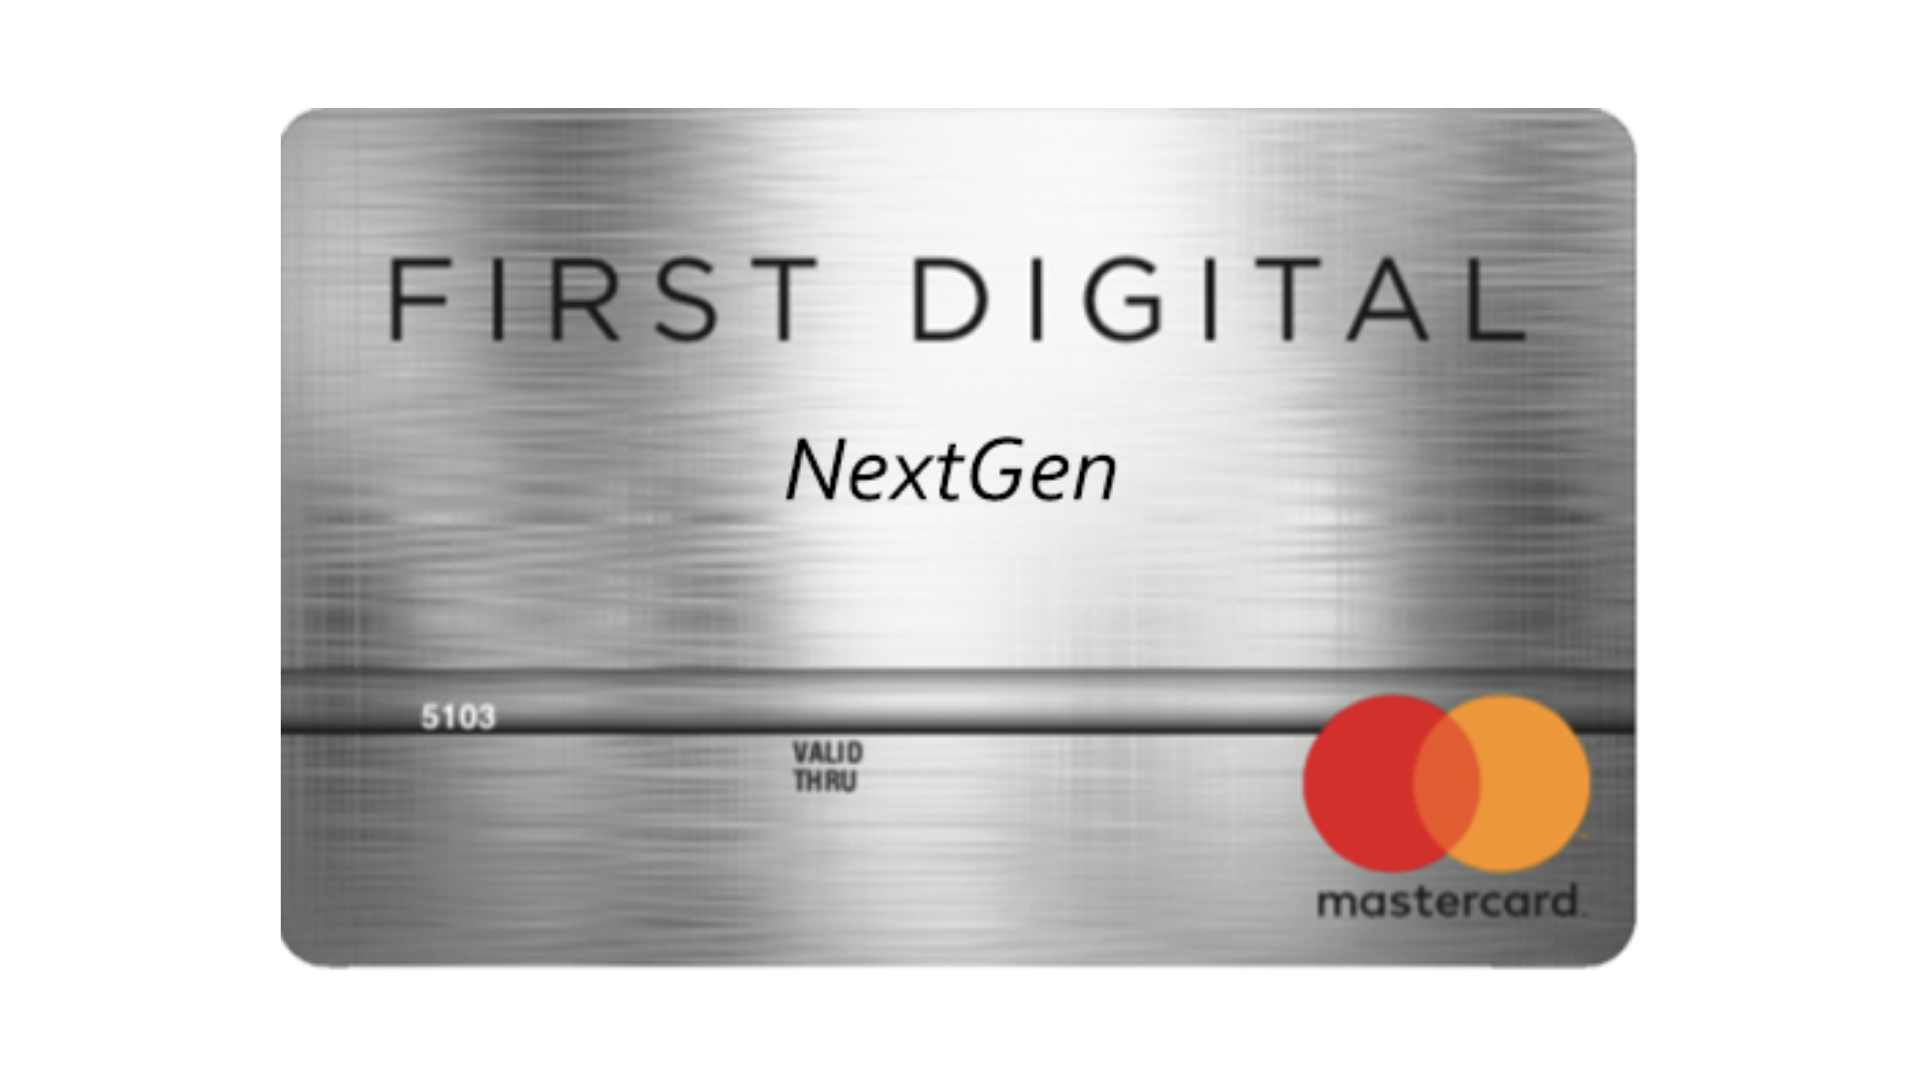 First Digital NextGen Mastercard® credit card